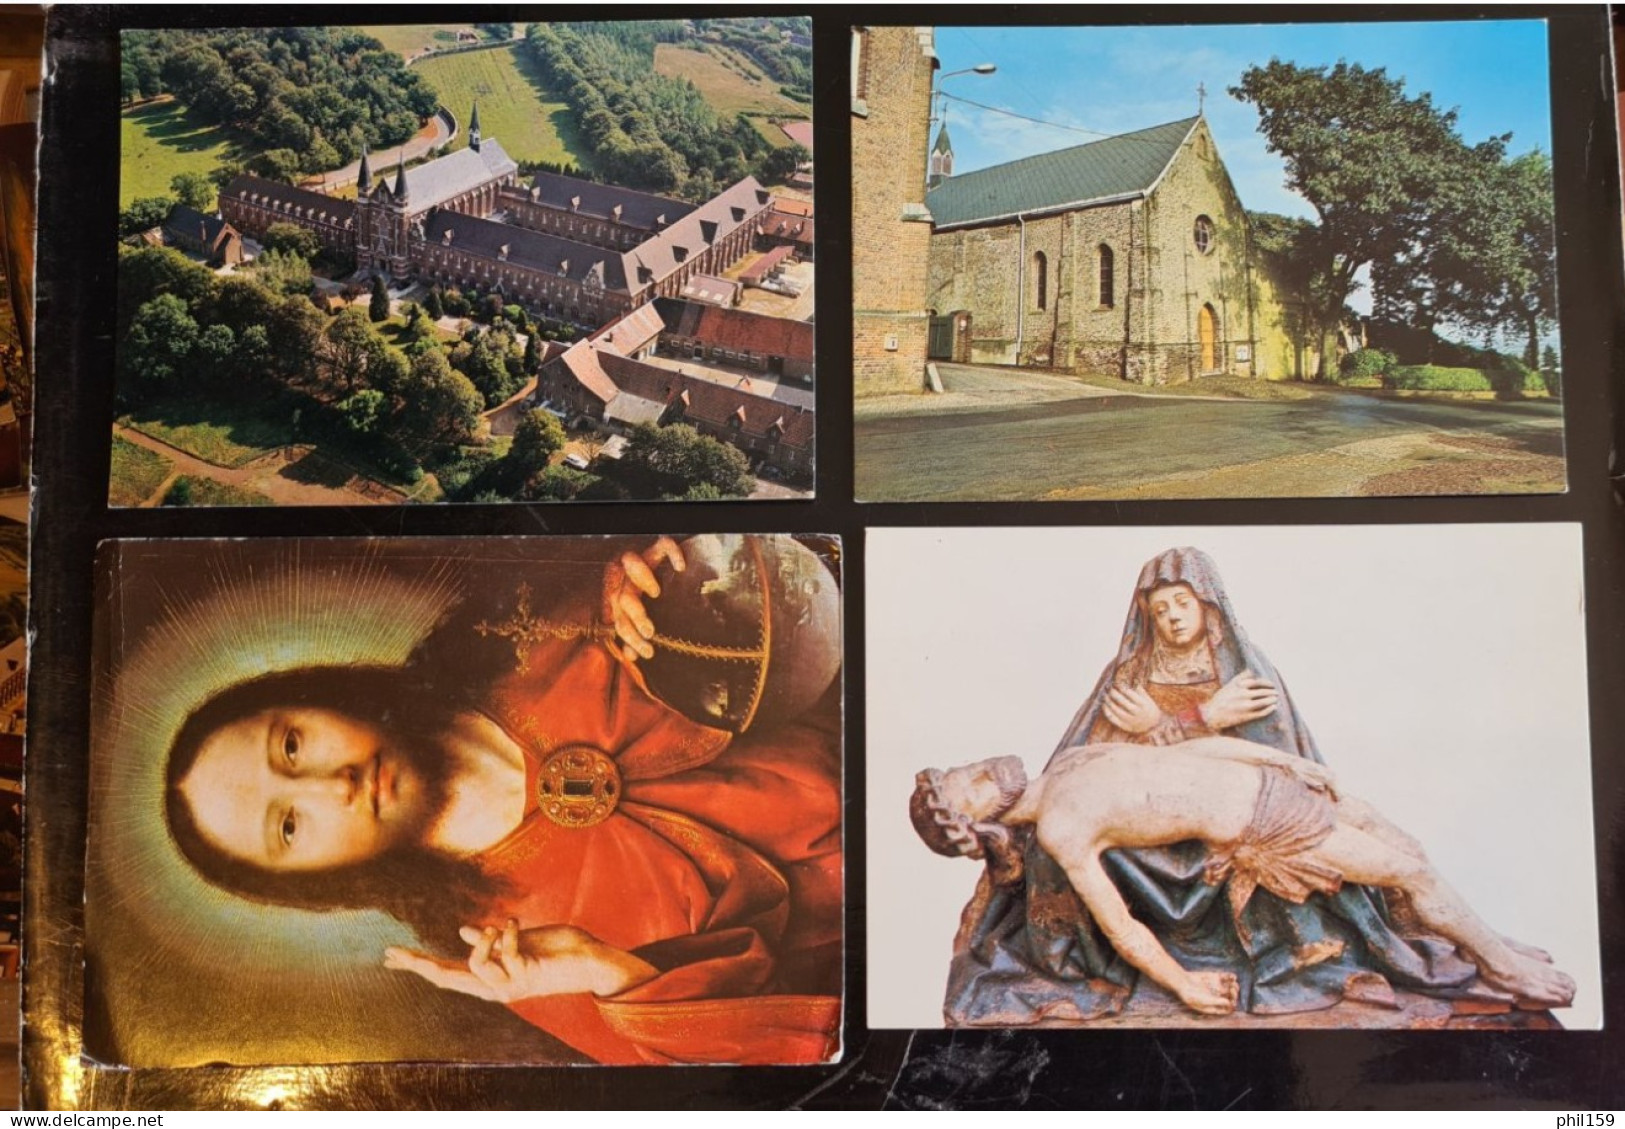 28 cartes de l'abbaye du Mont des Cats, Godewaersvelde